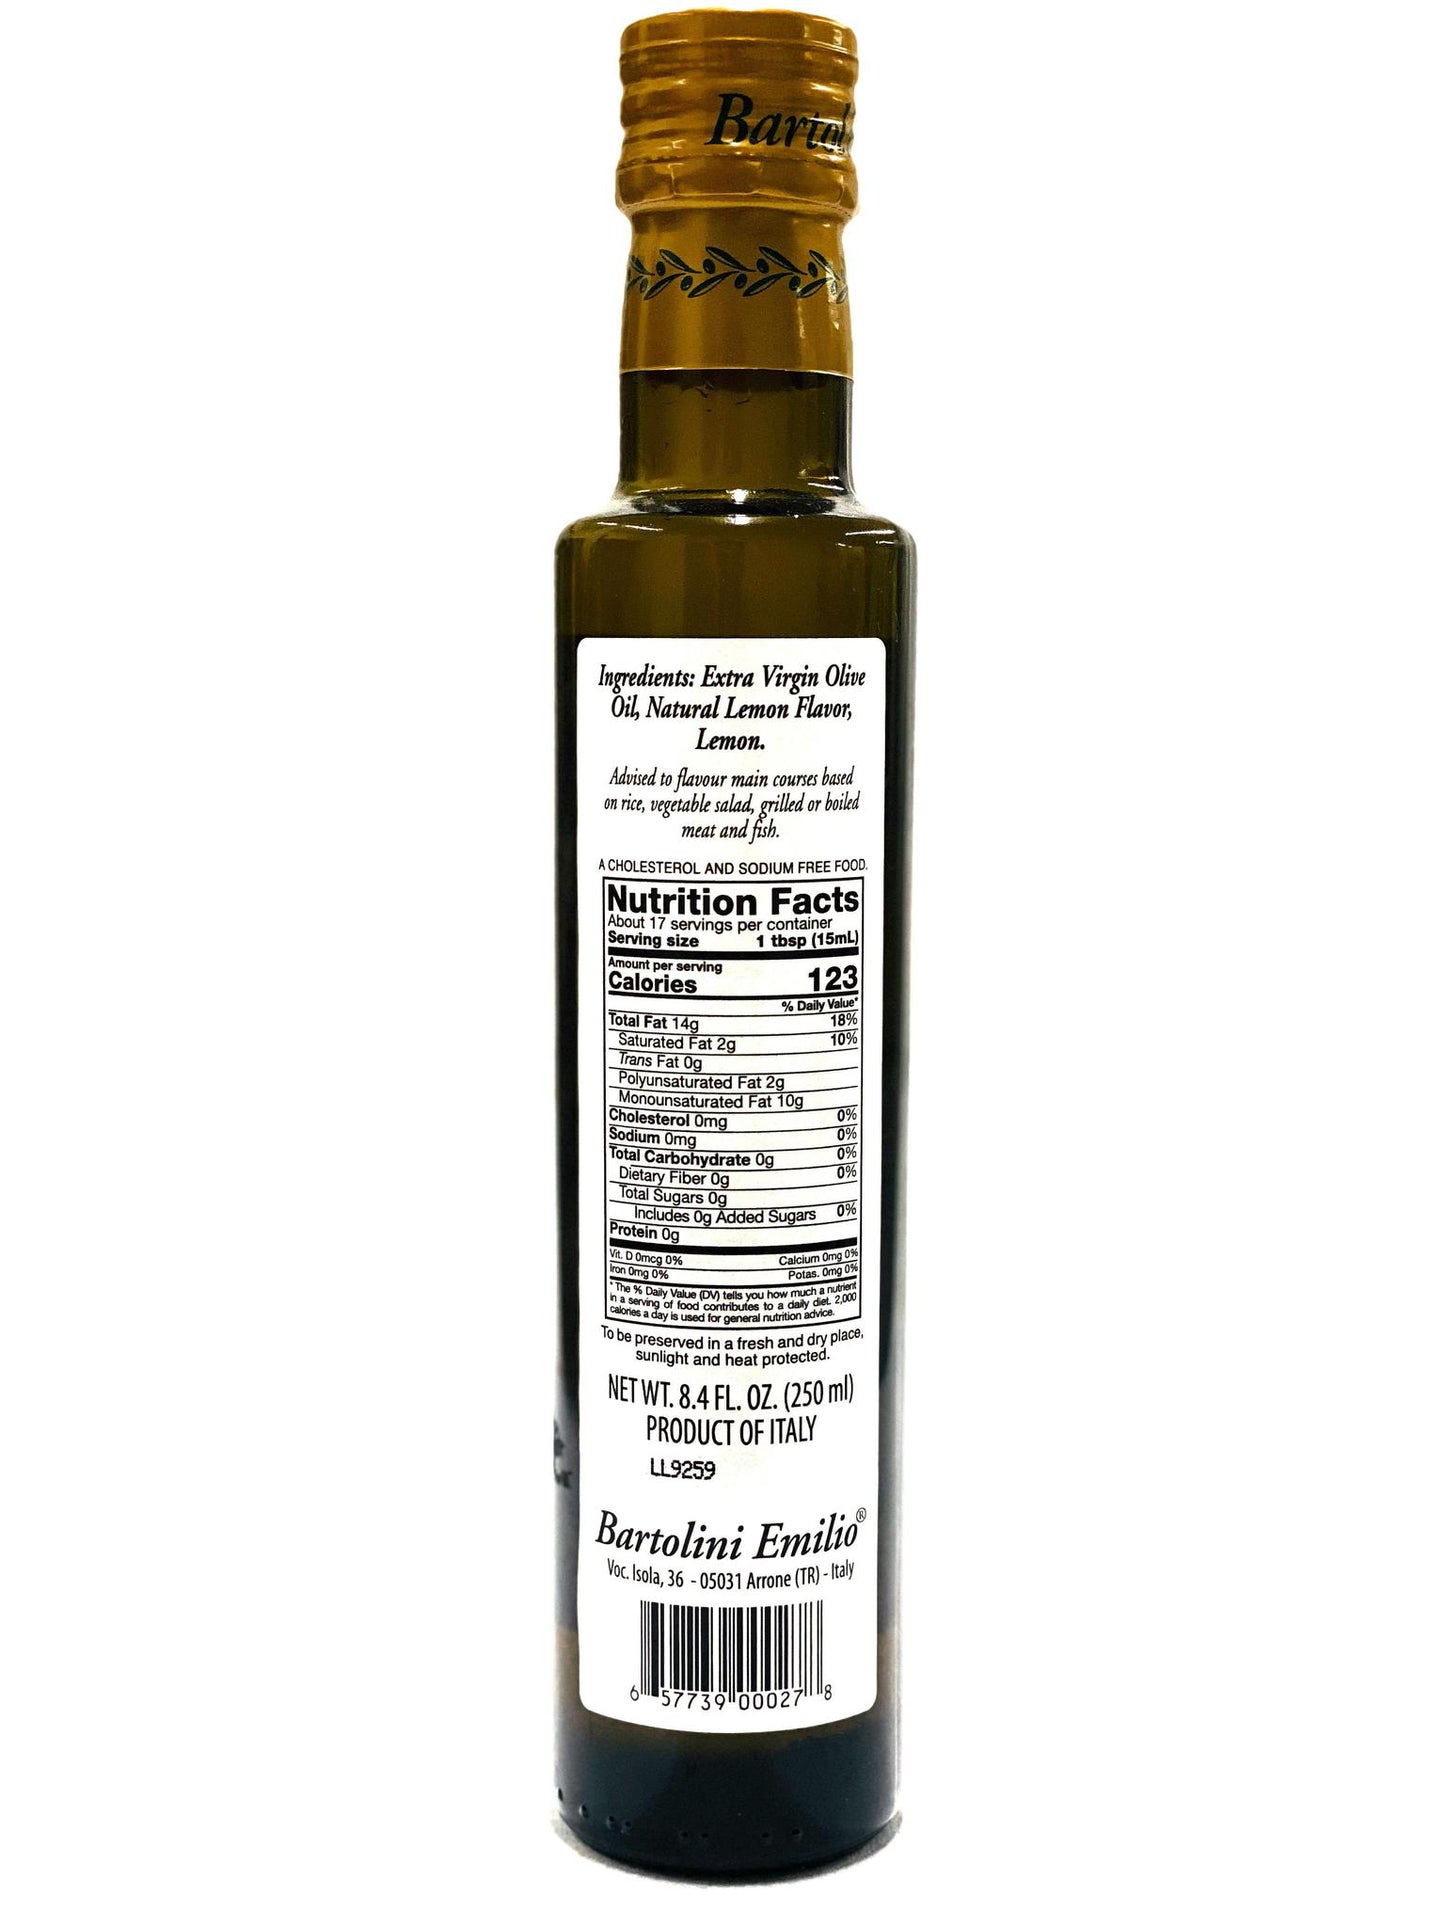 Bartolini Extra Virgin Olive Oil With Lemon Peel, 8.4 fl oz